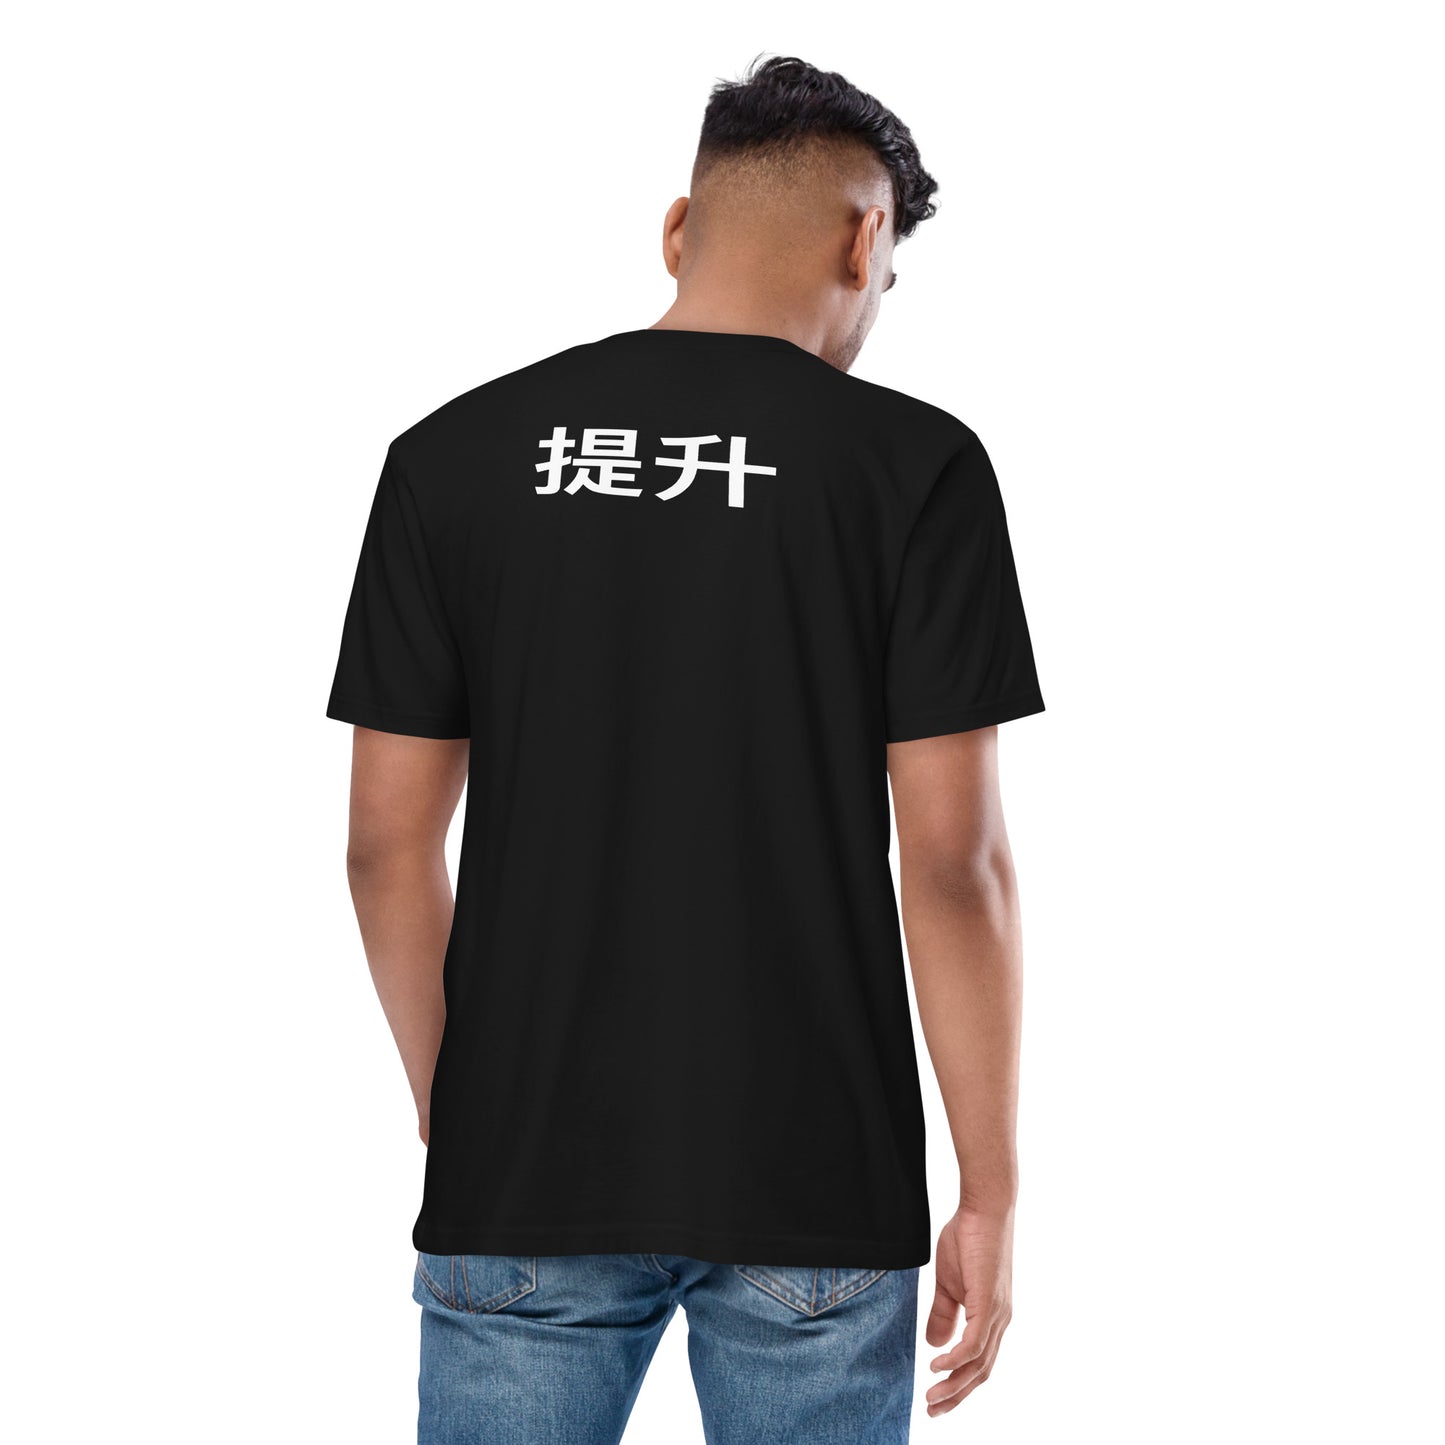 Elevate Heavyweight T-Shirt 2.0